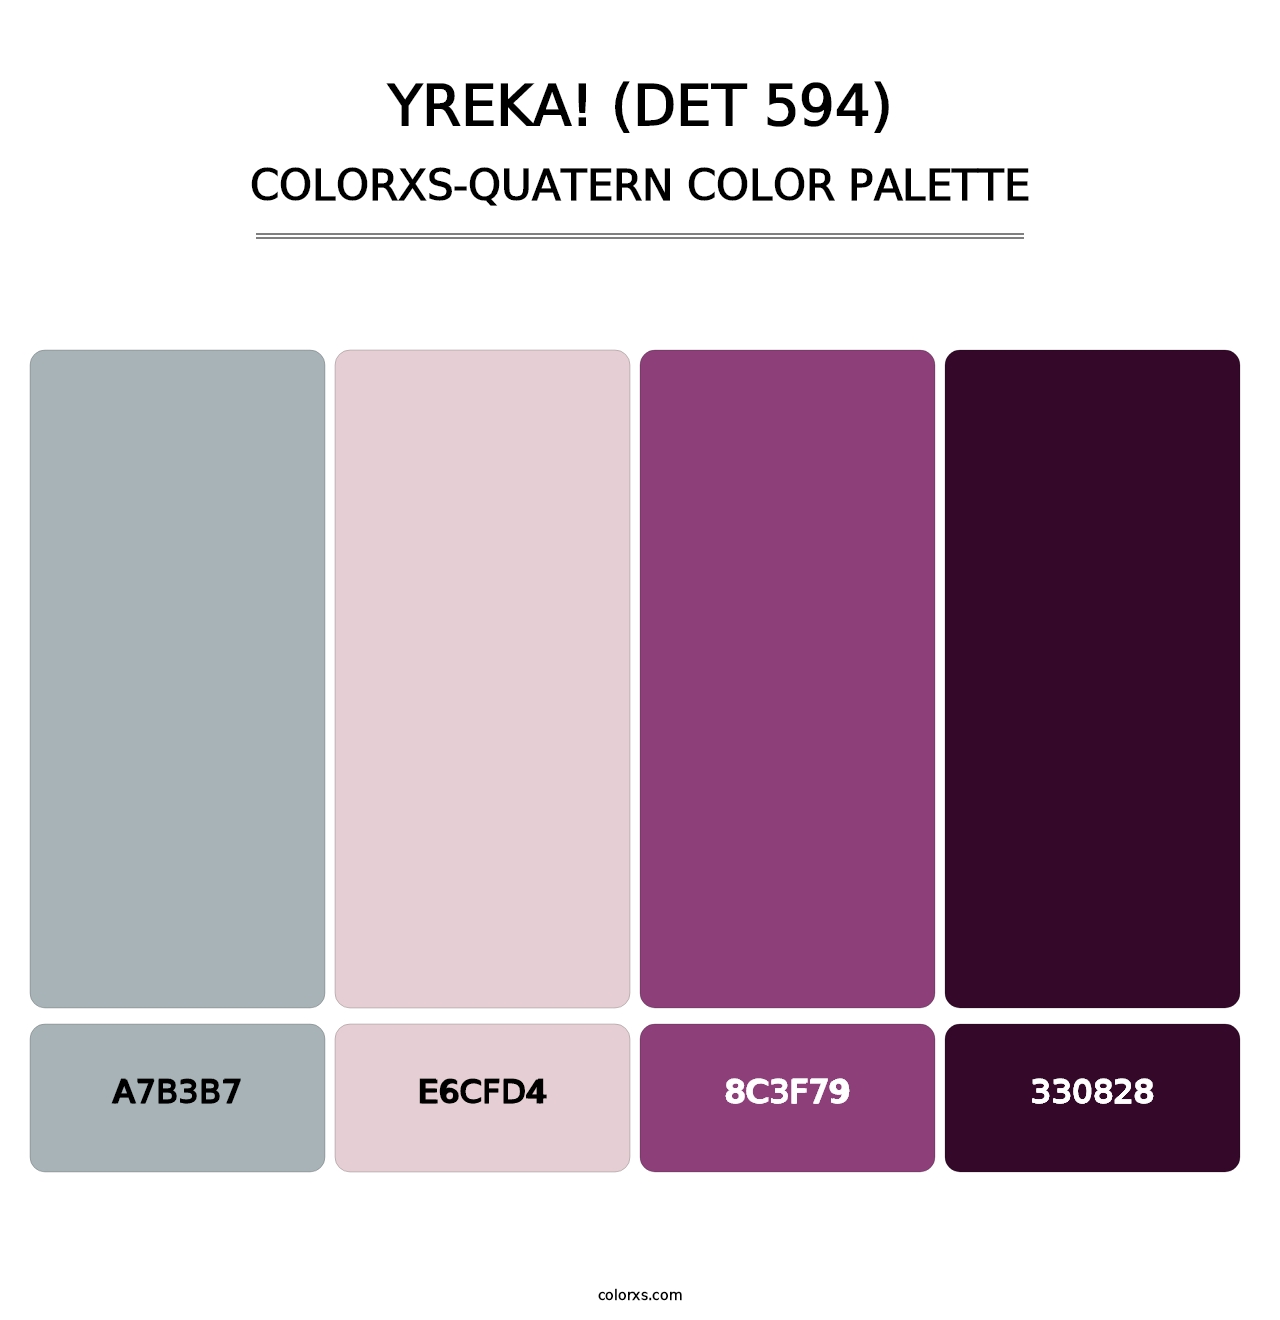 Yreka! (DET 594) - Colorxs Quatern Palette